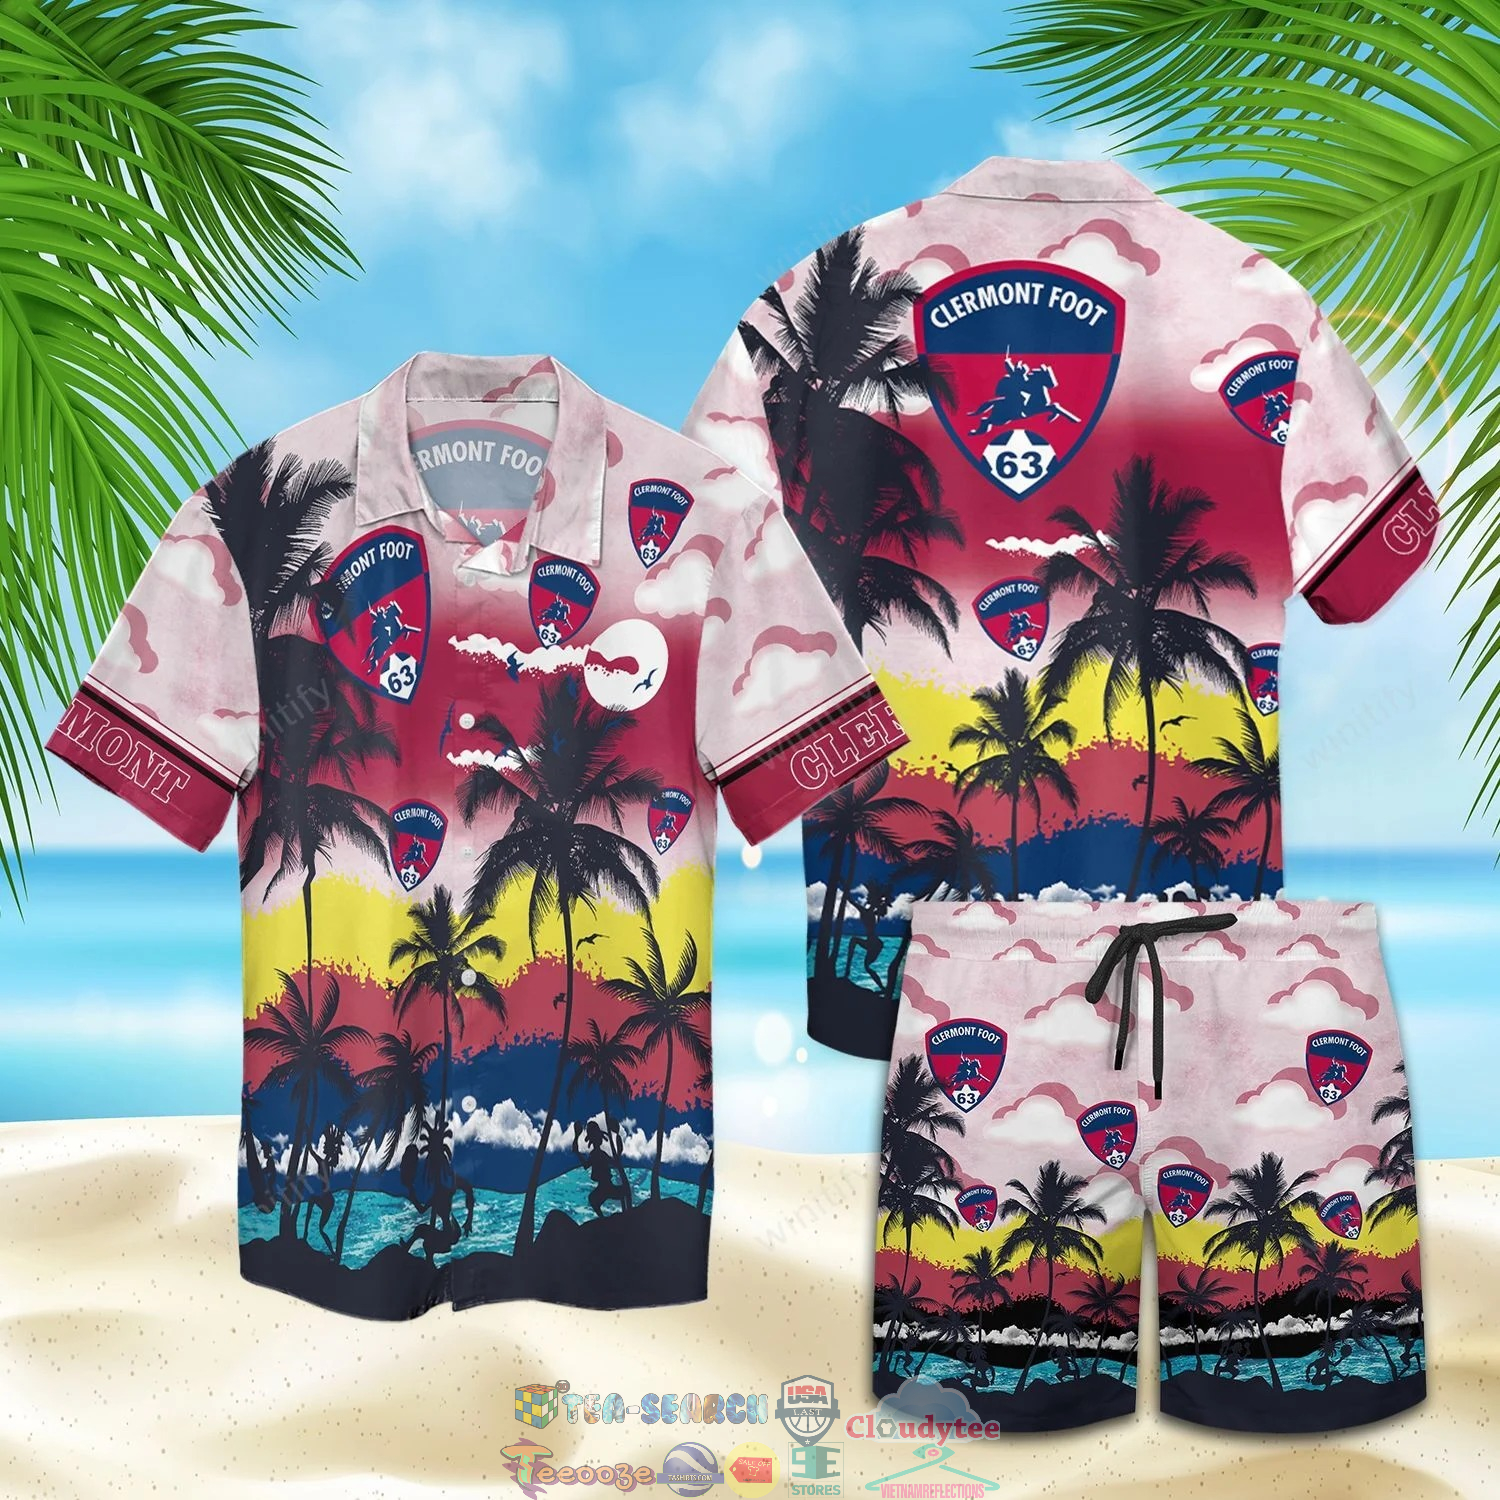 Clermont Foot Auvergne 63 FC Palm Tree Hawaiian Shirt Beach Shorts